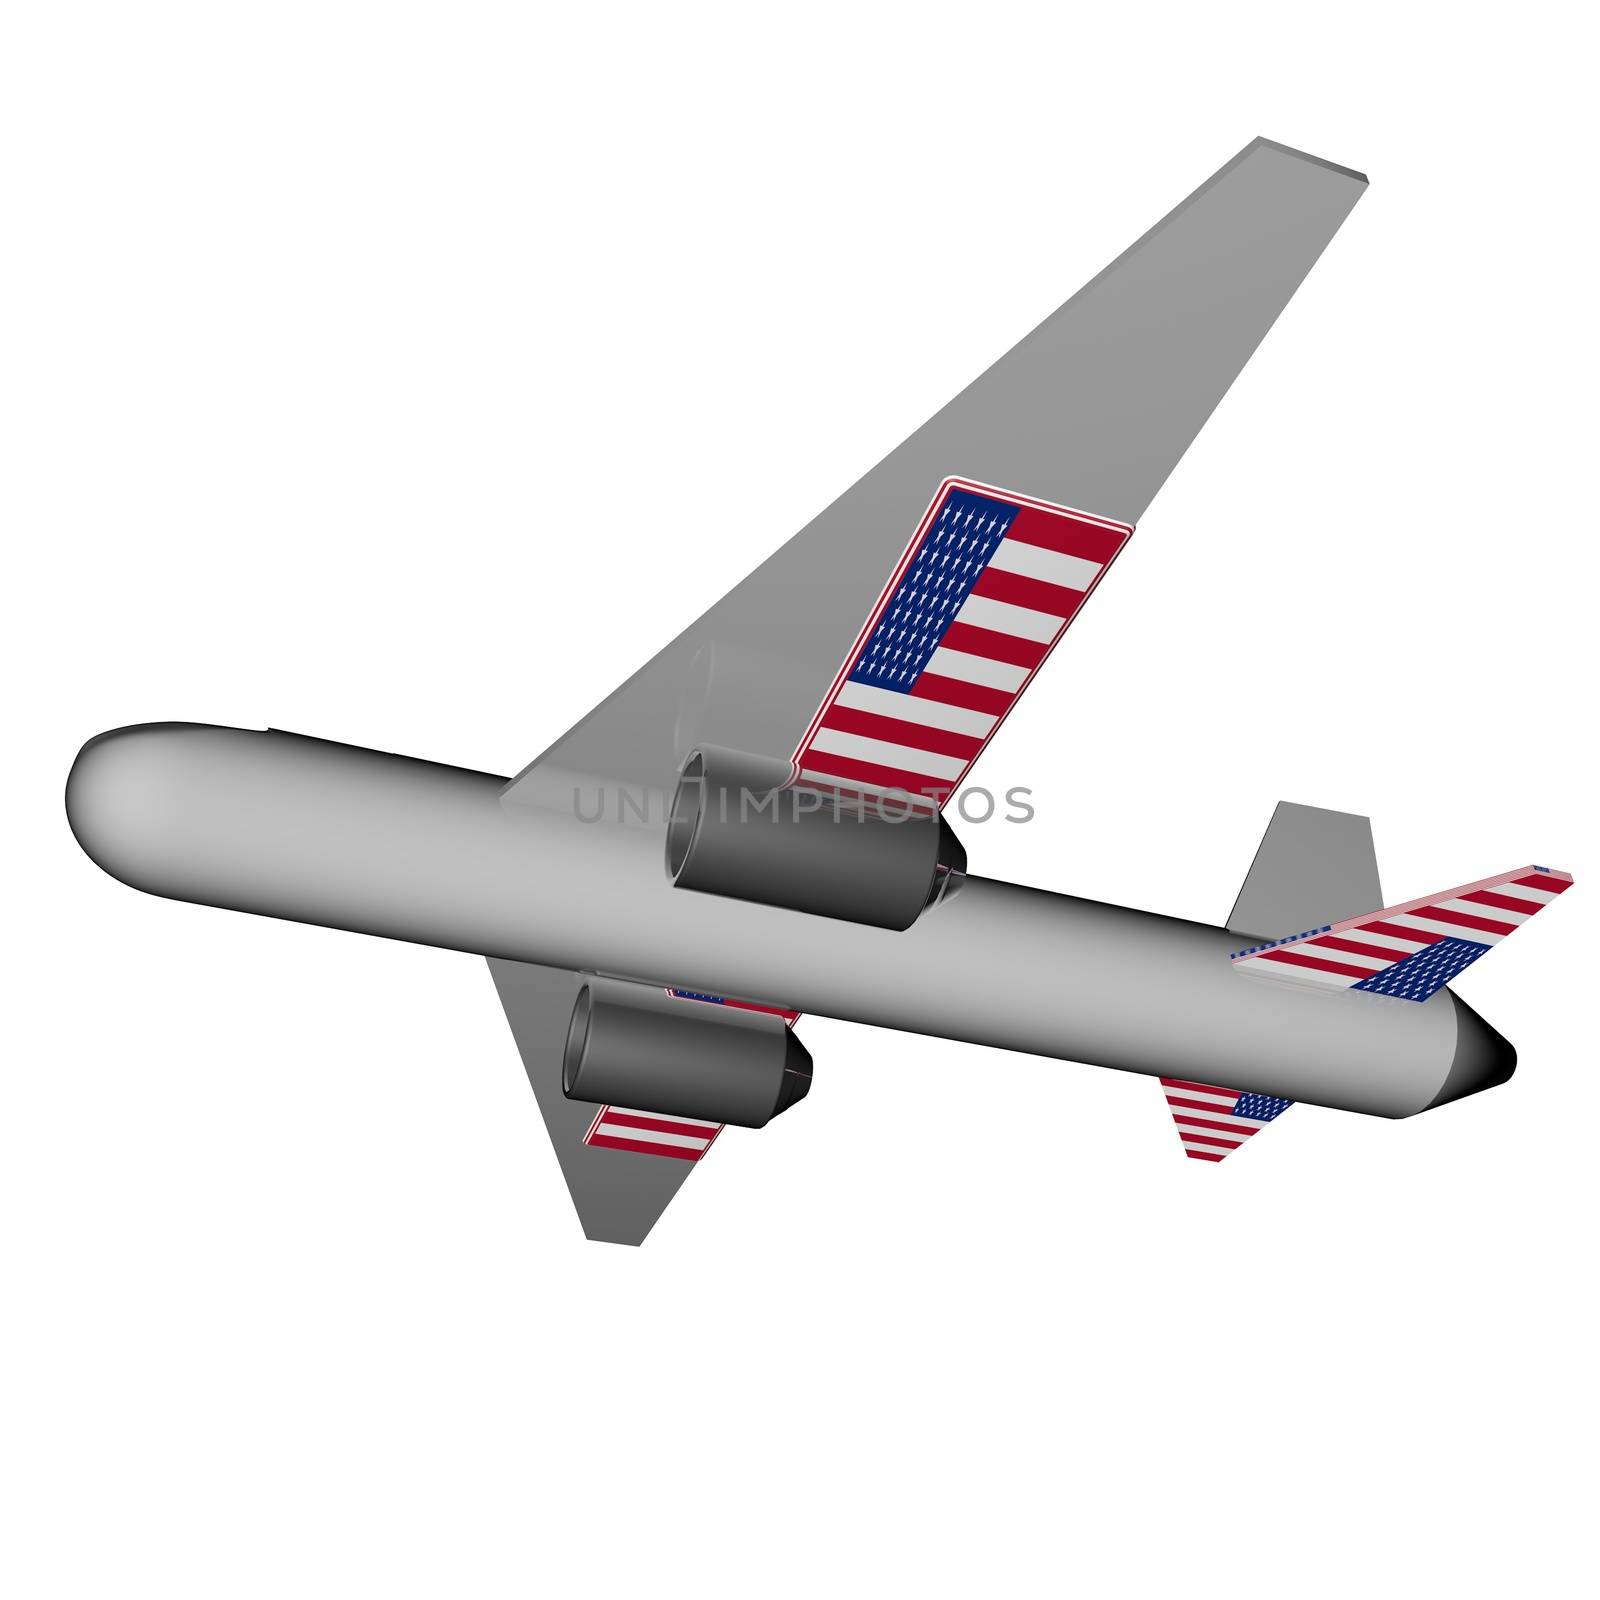 US Plane by Koufax73